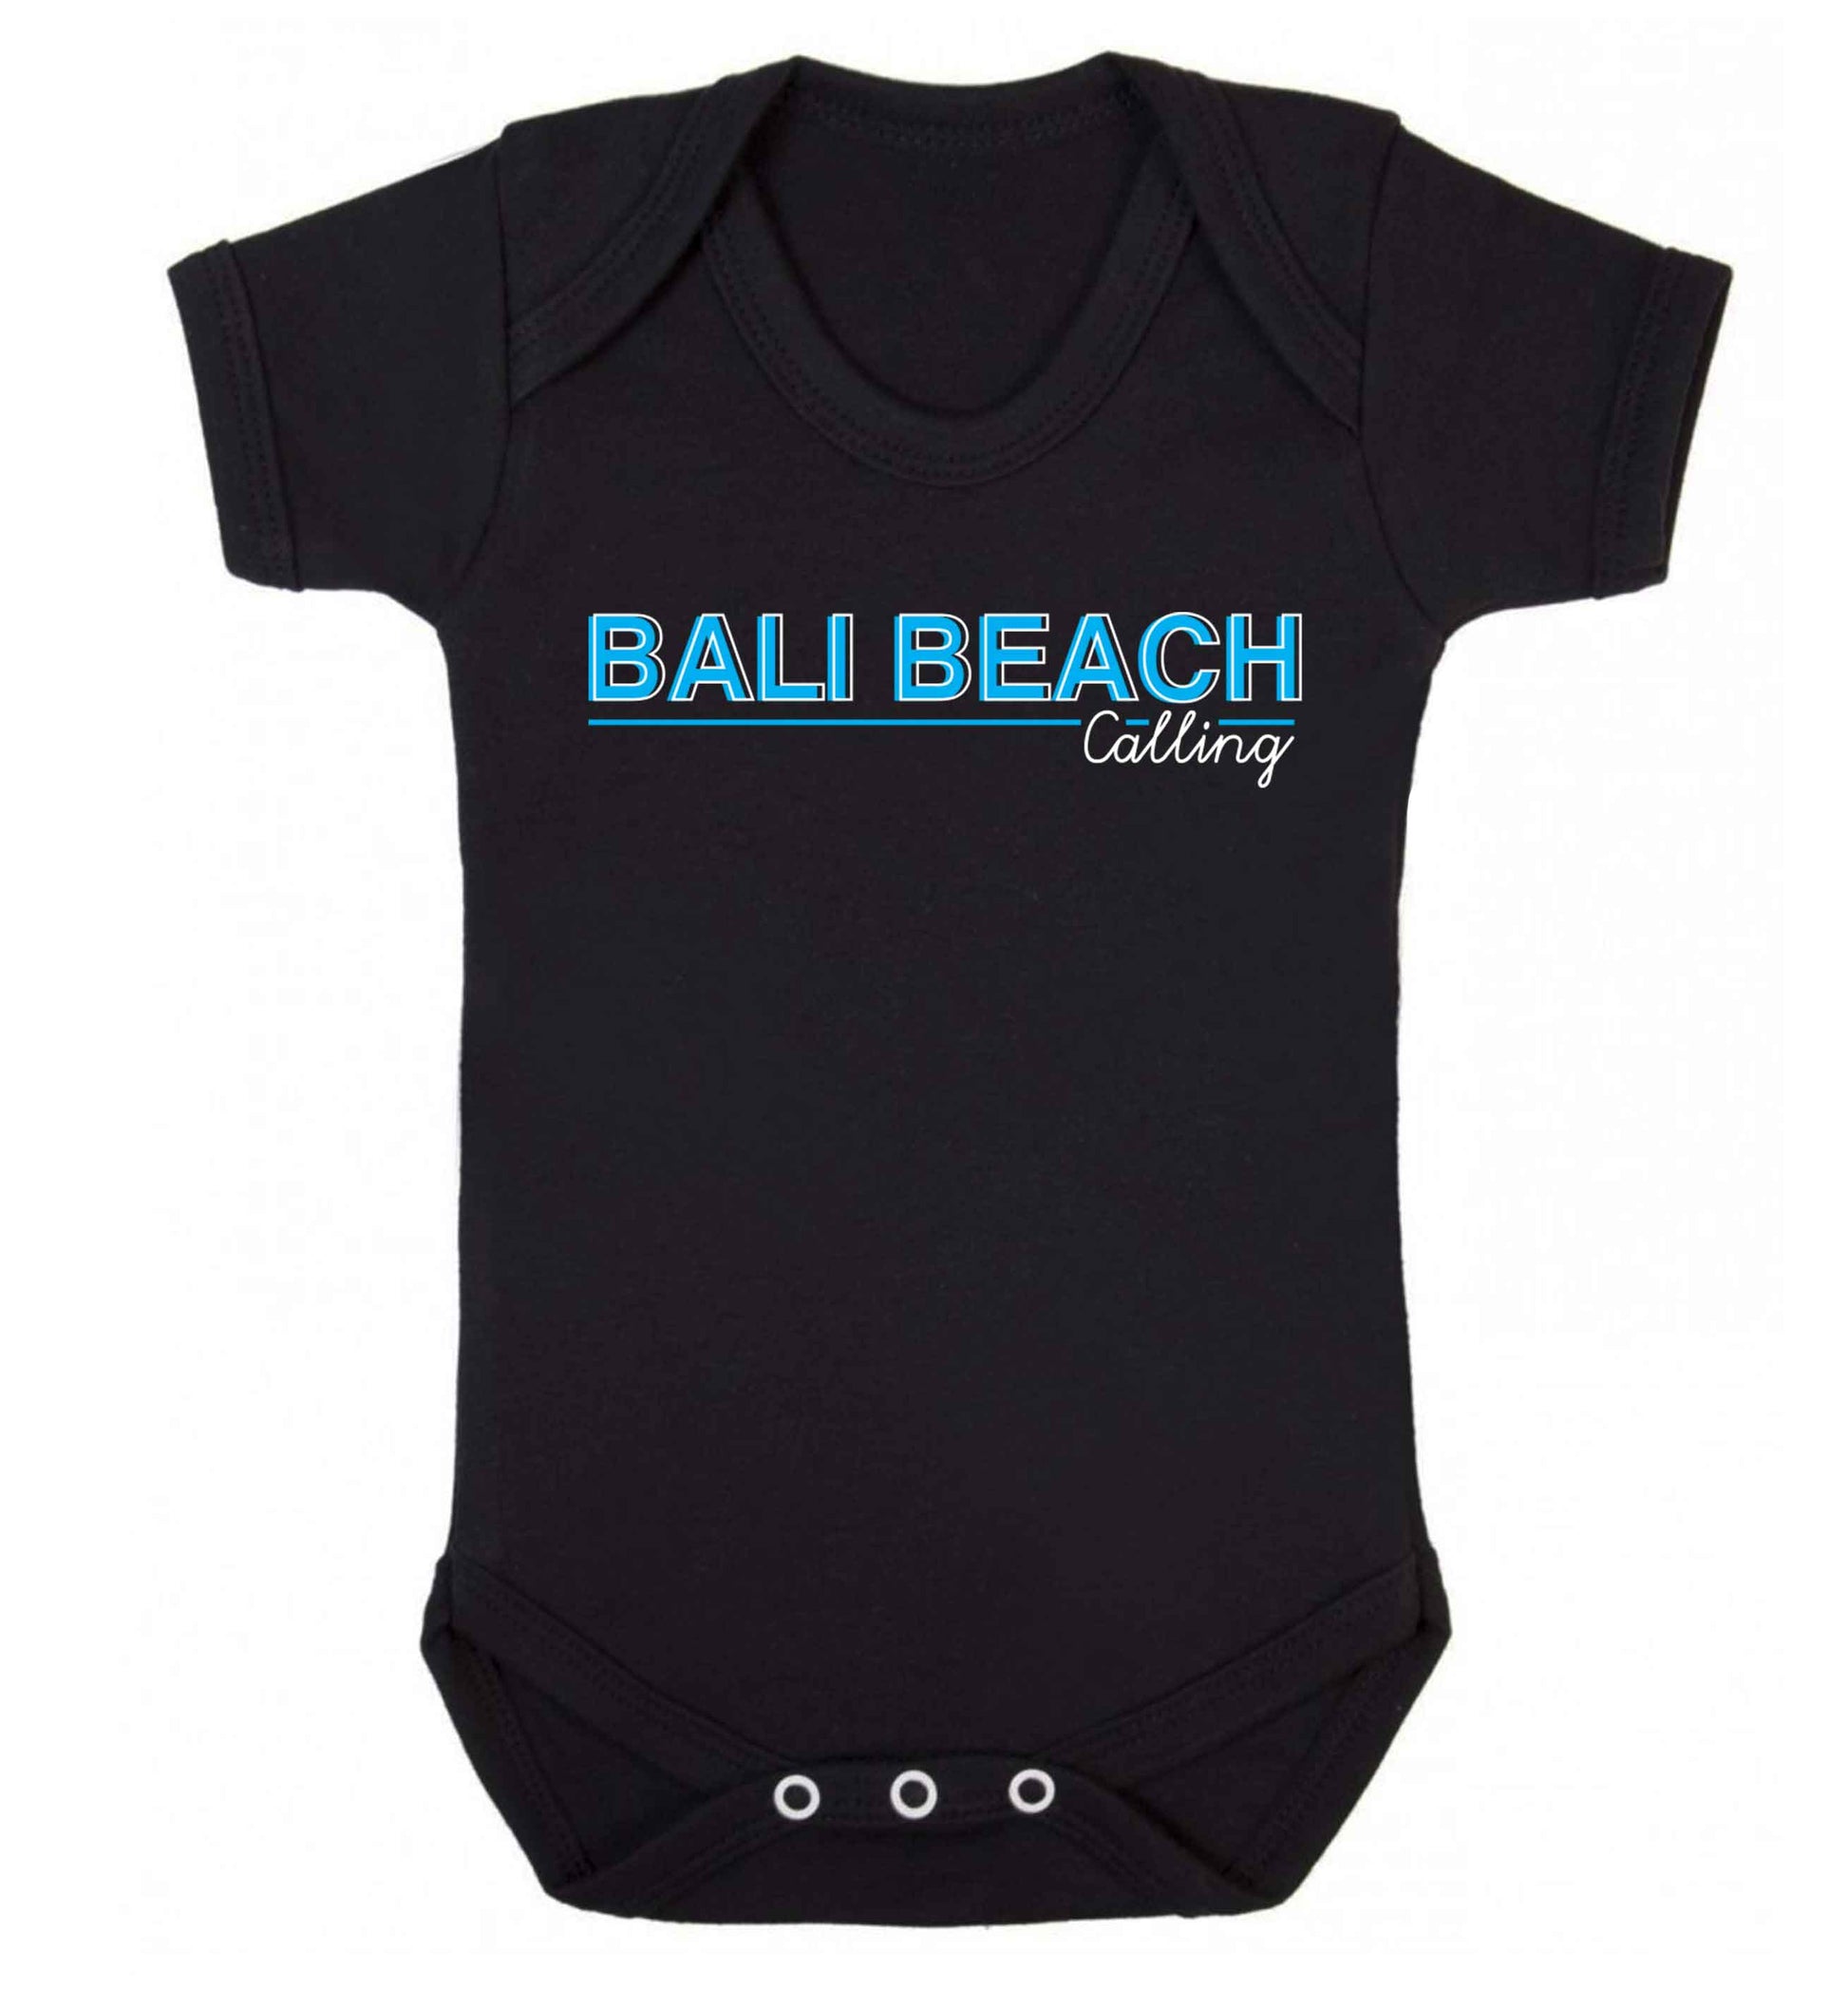 Bali beach calling Baby Vest black 18-24 months